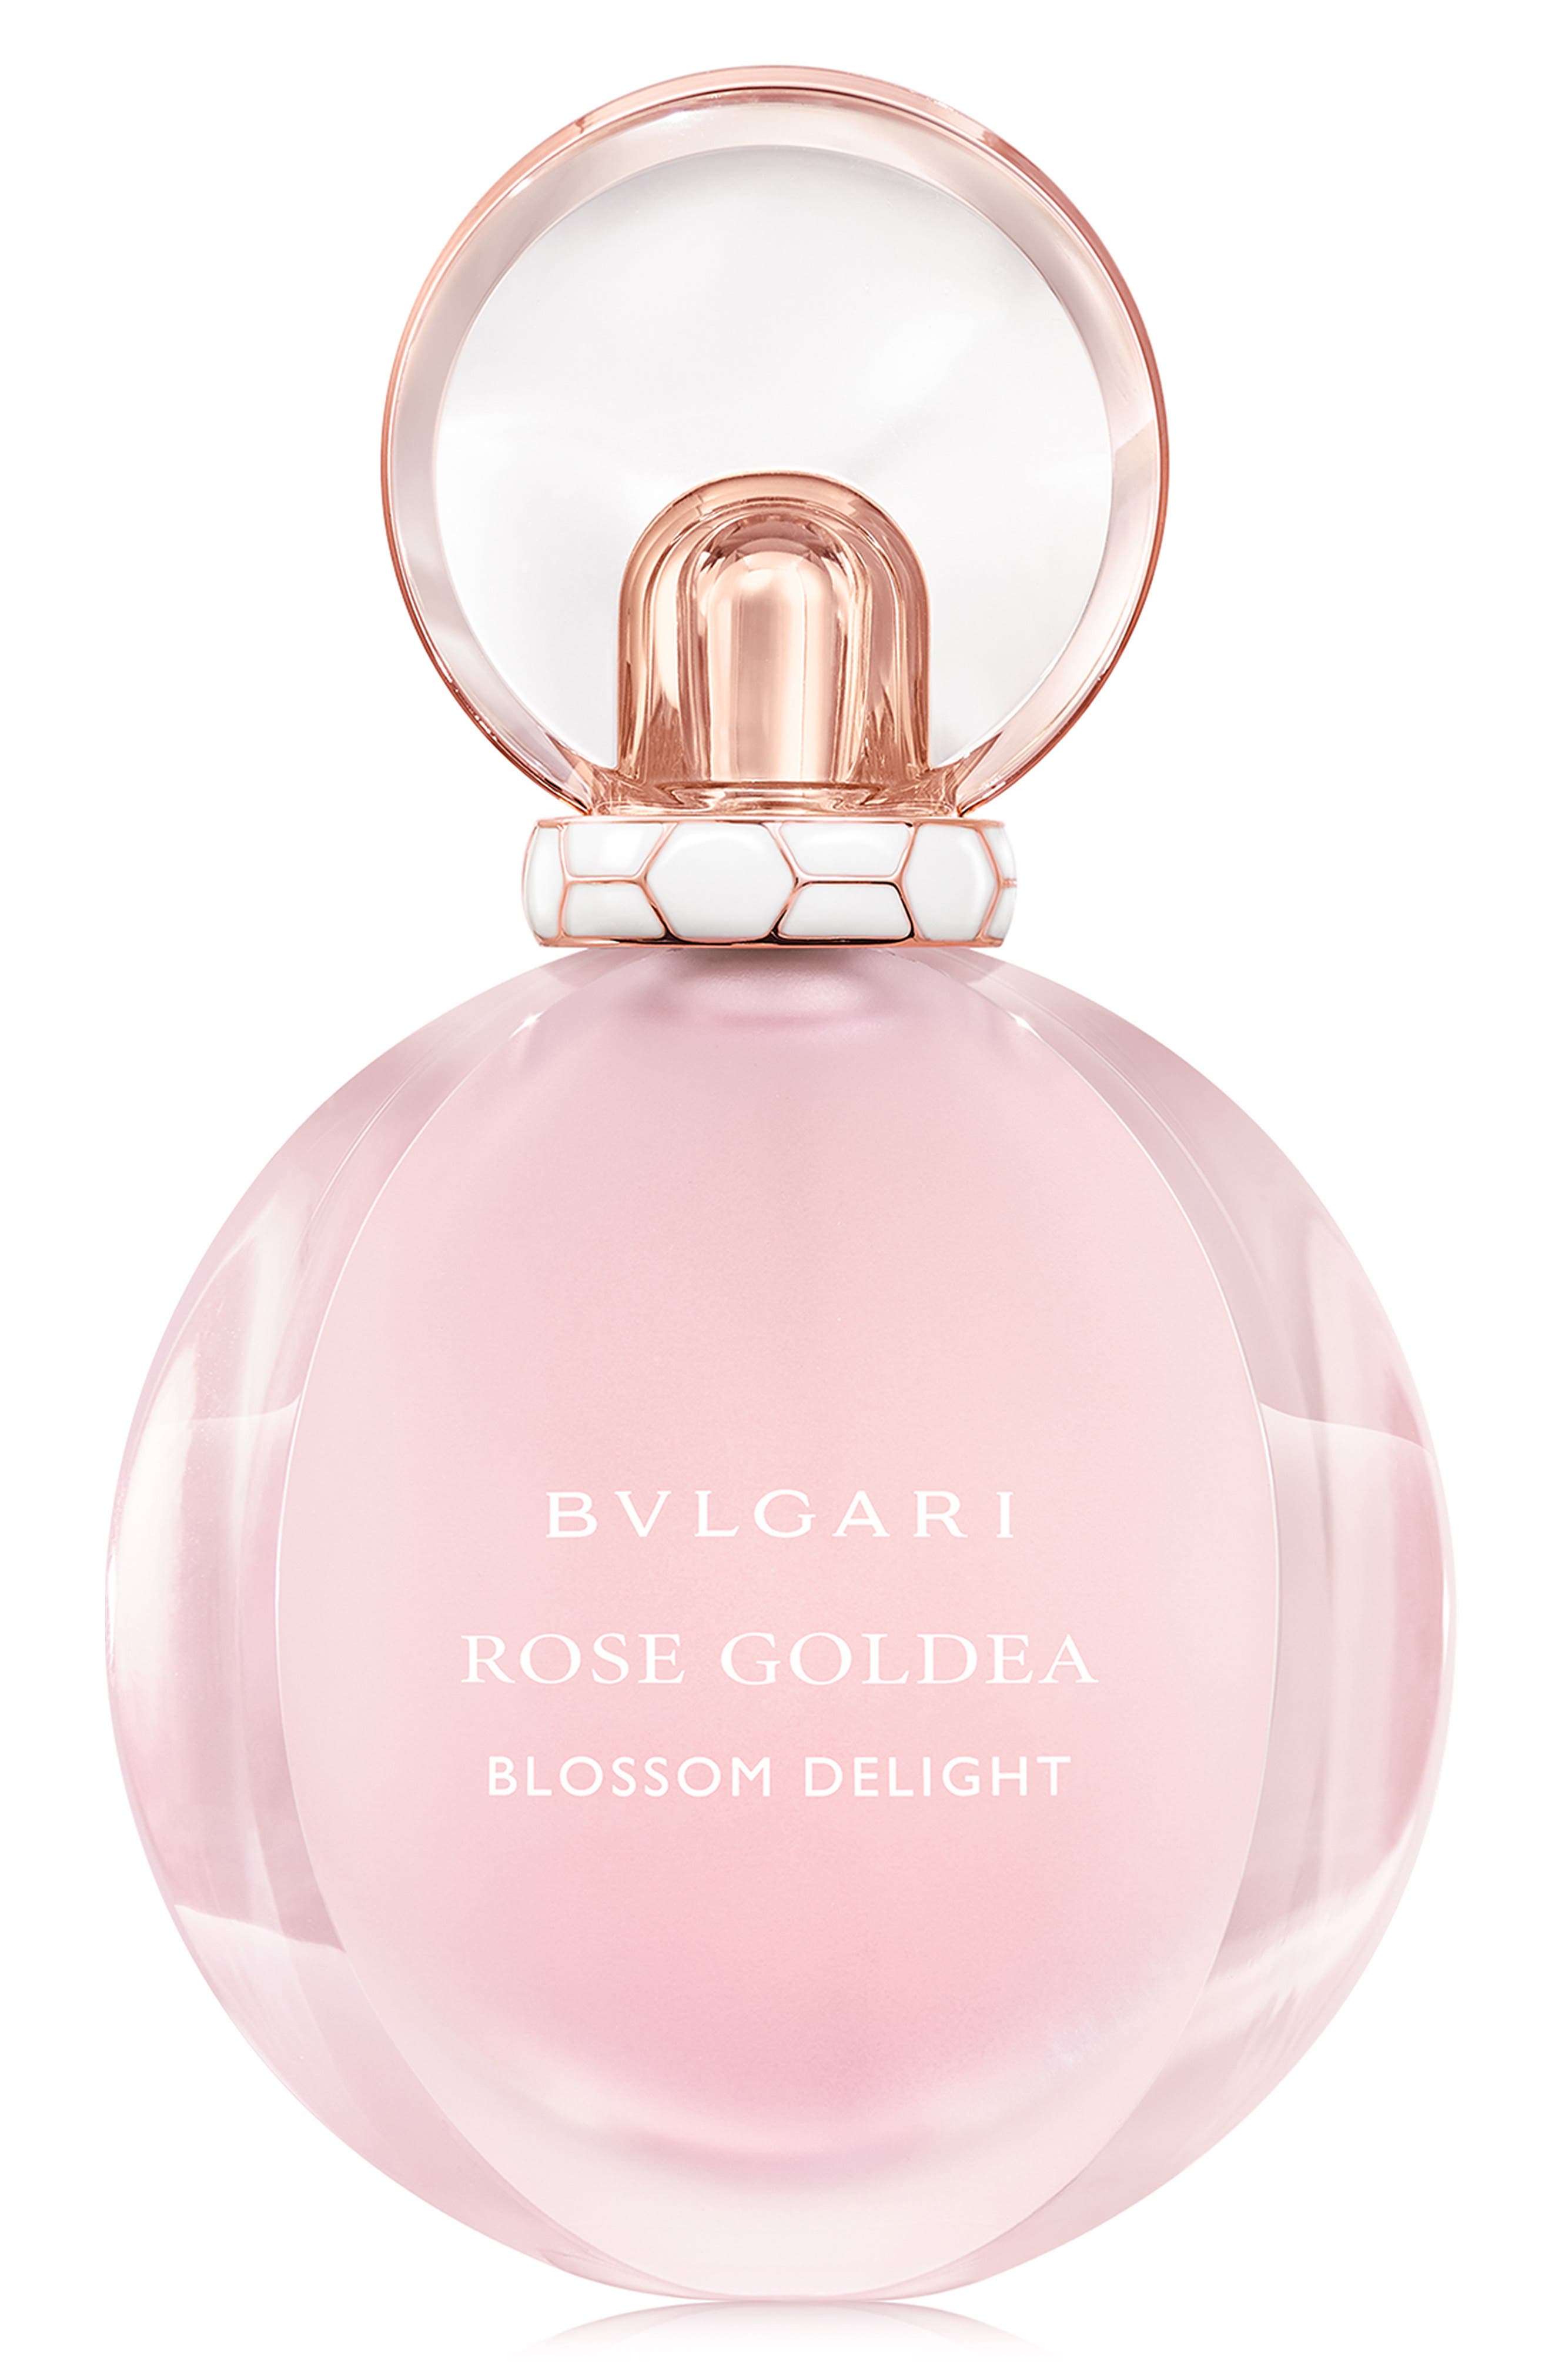 BVLGARI Rose Goldea Blossom Delight Eau de Parfum at Nordstrom, Size 2.5 Oz